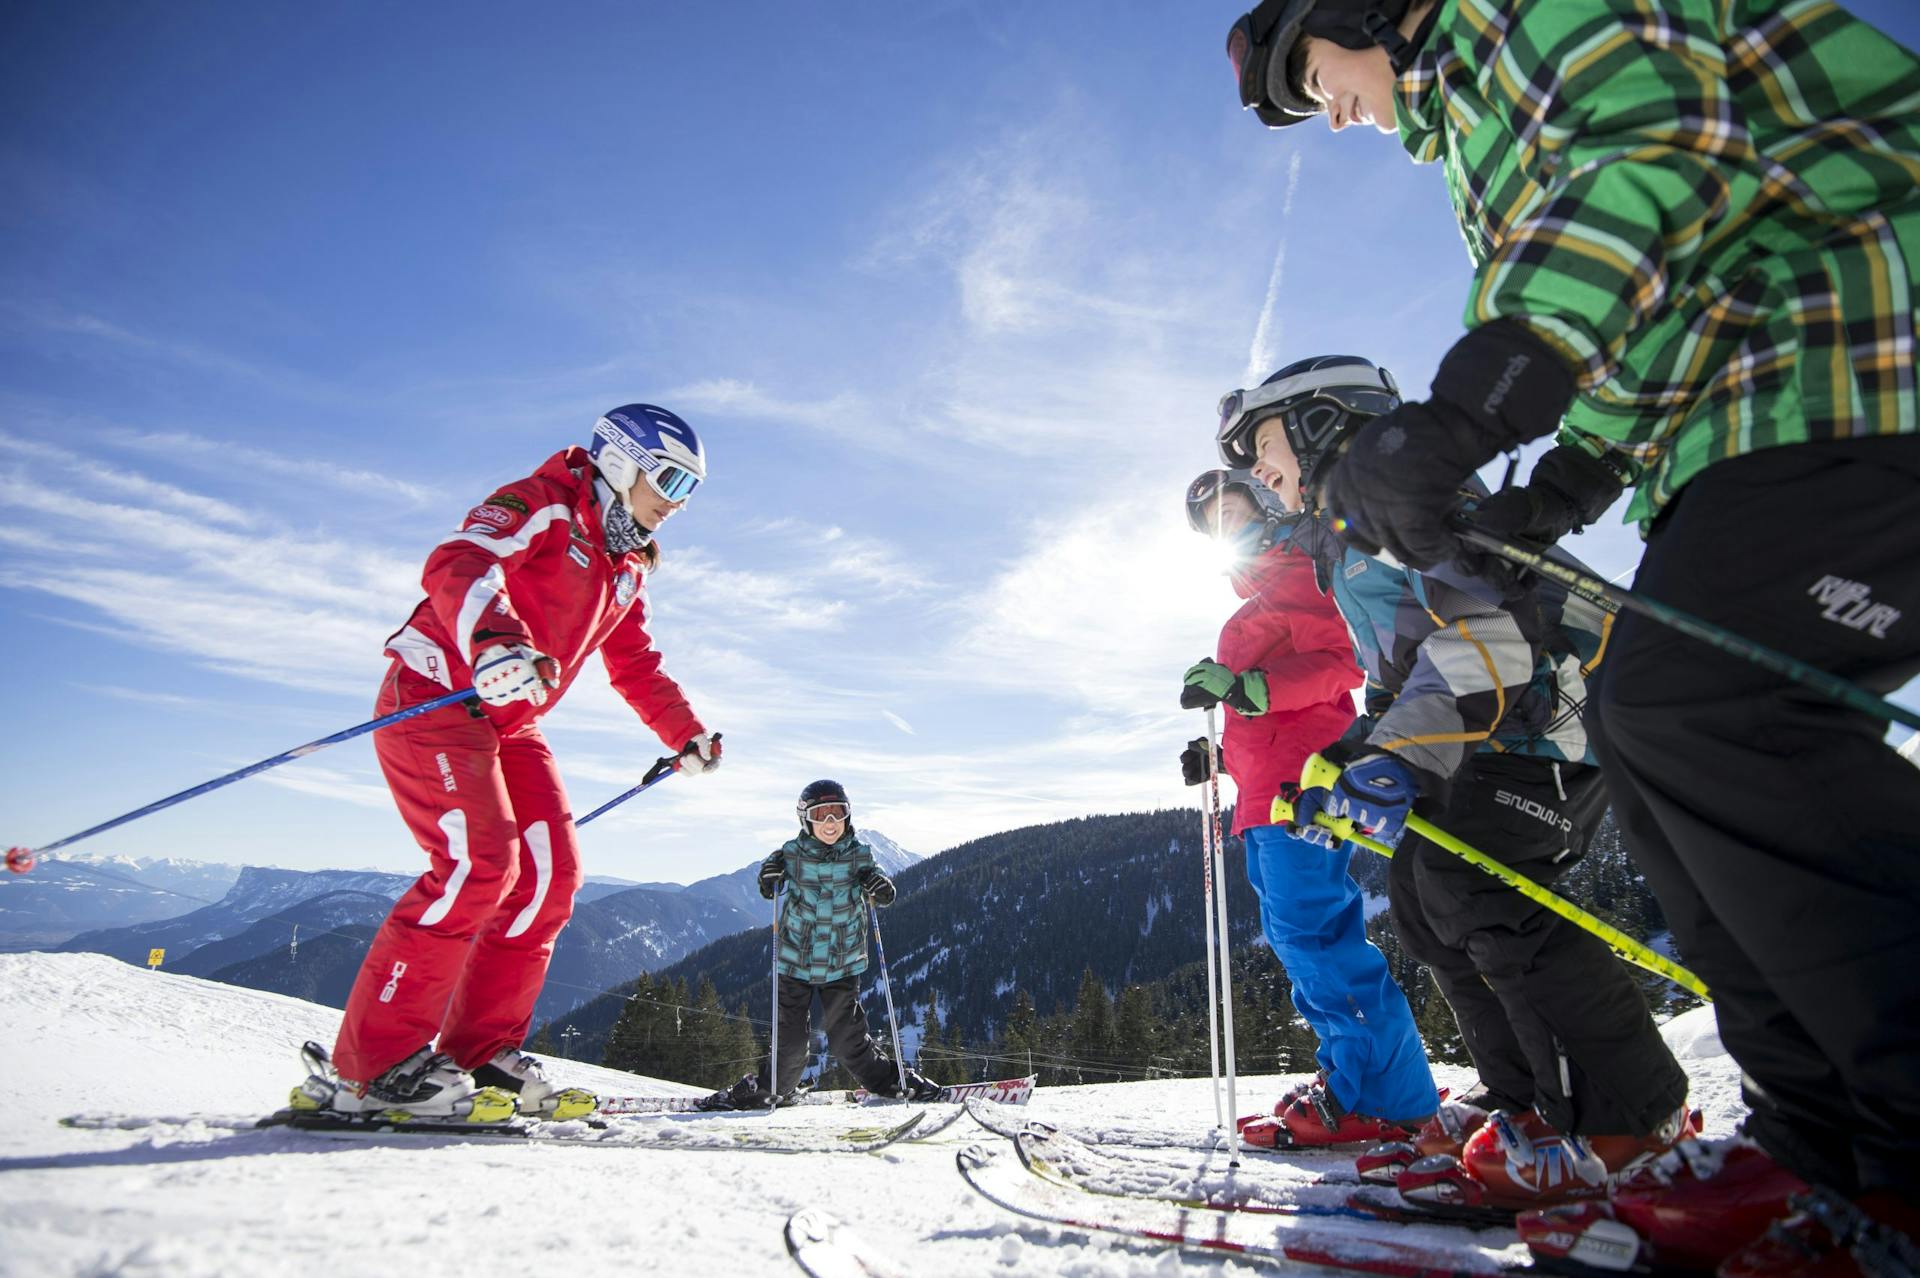 Ski instructor teaching laughing children to ski